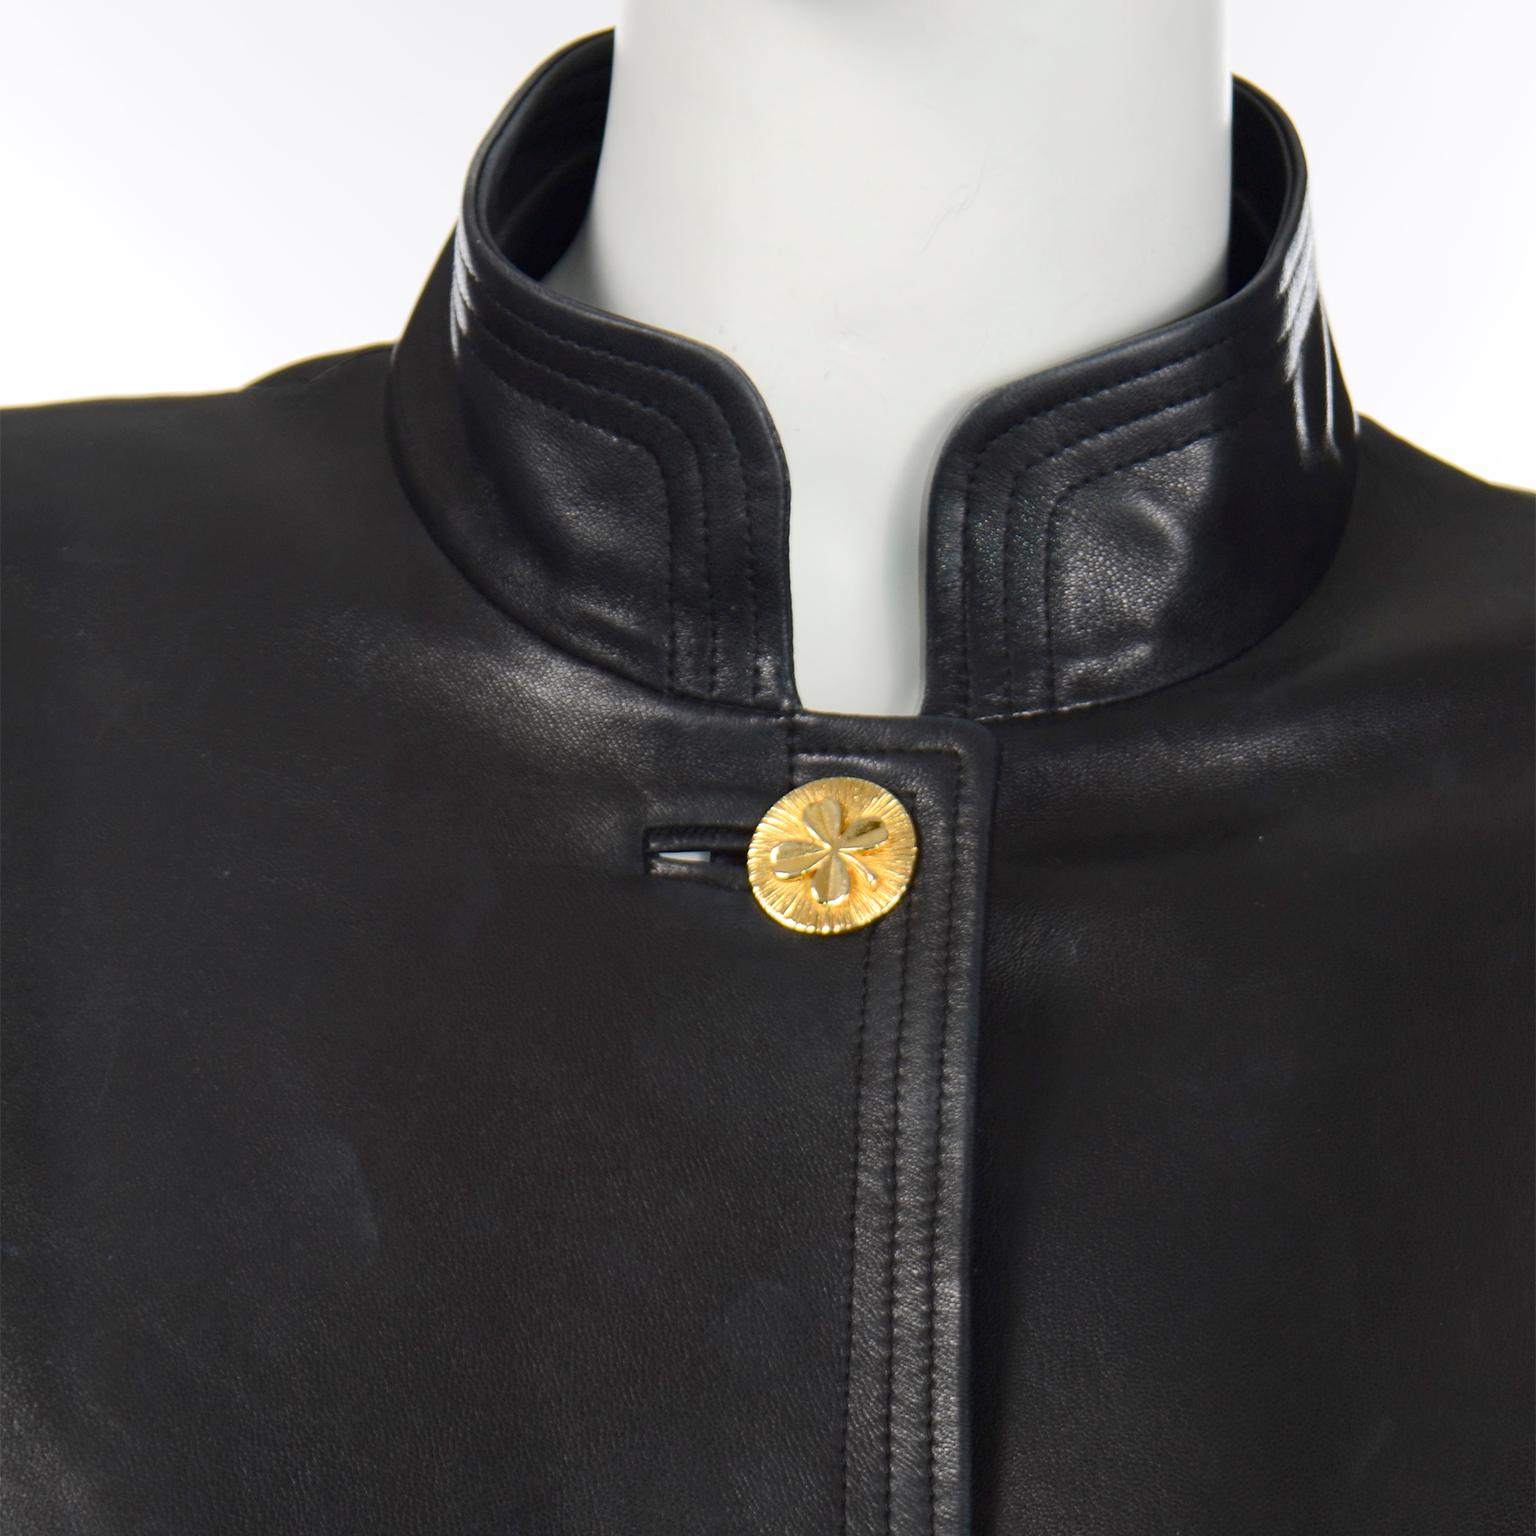 Chanel Vintage Black Leather Jacket with 4 Leaf Clover Gold Buttons 1